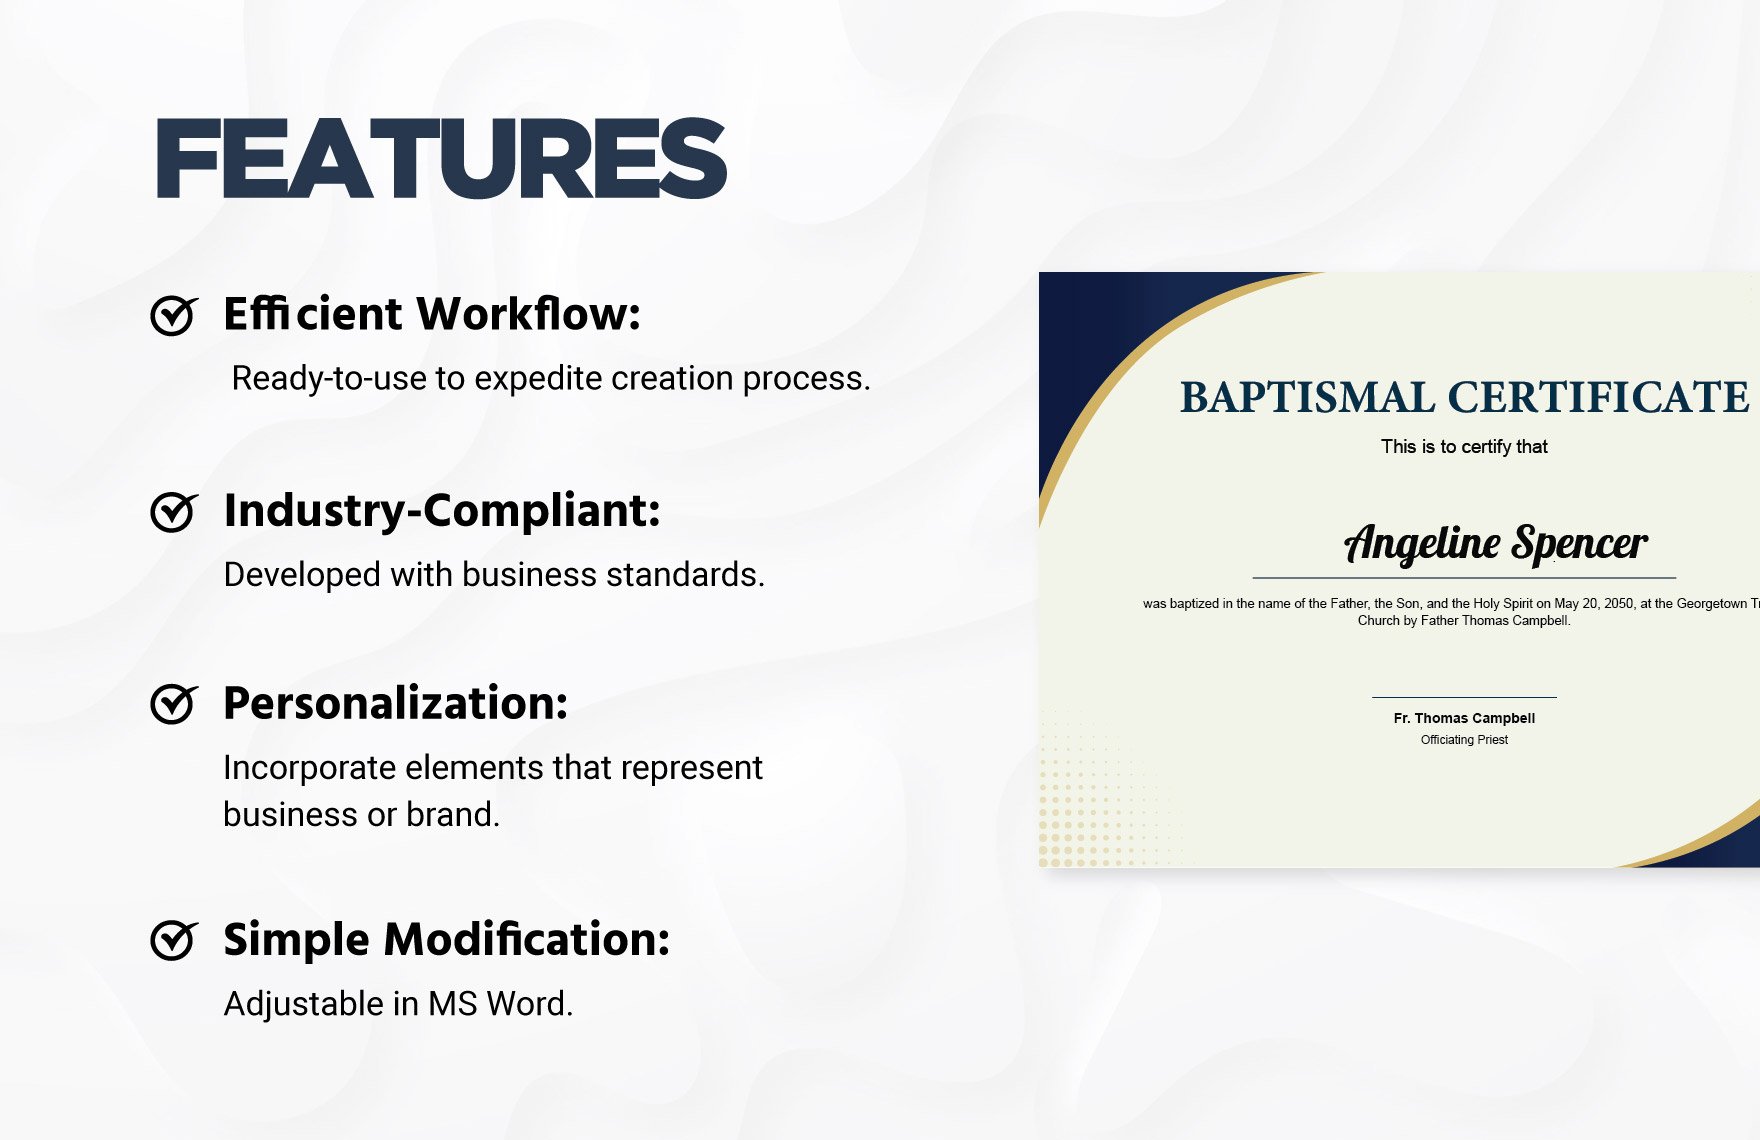 Baptism Certificate Template